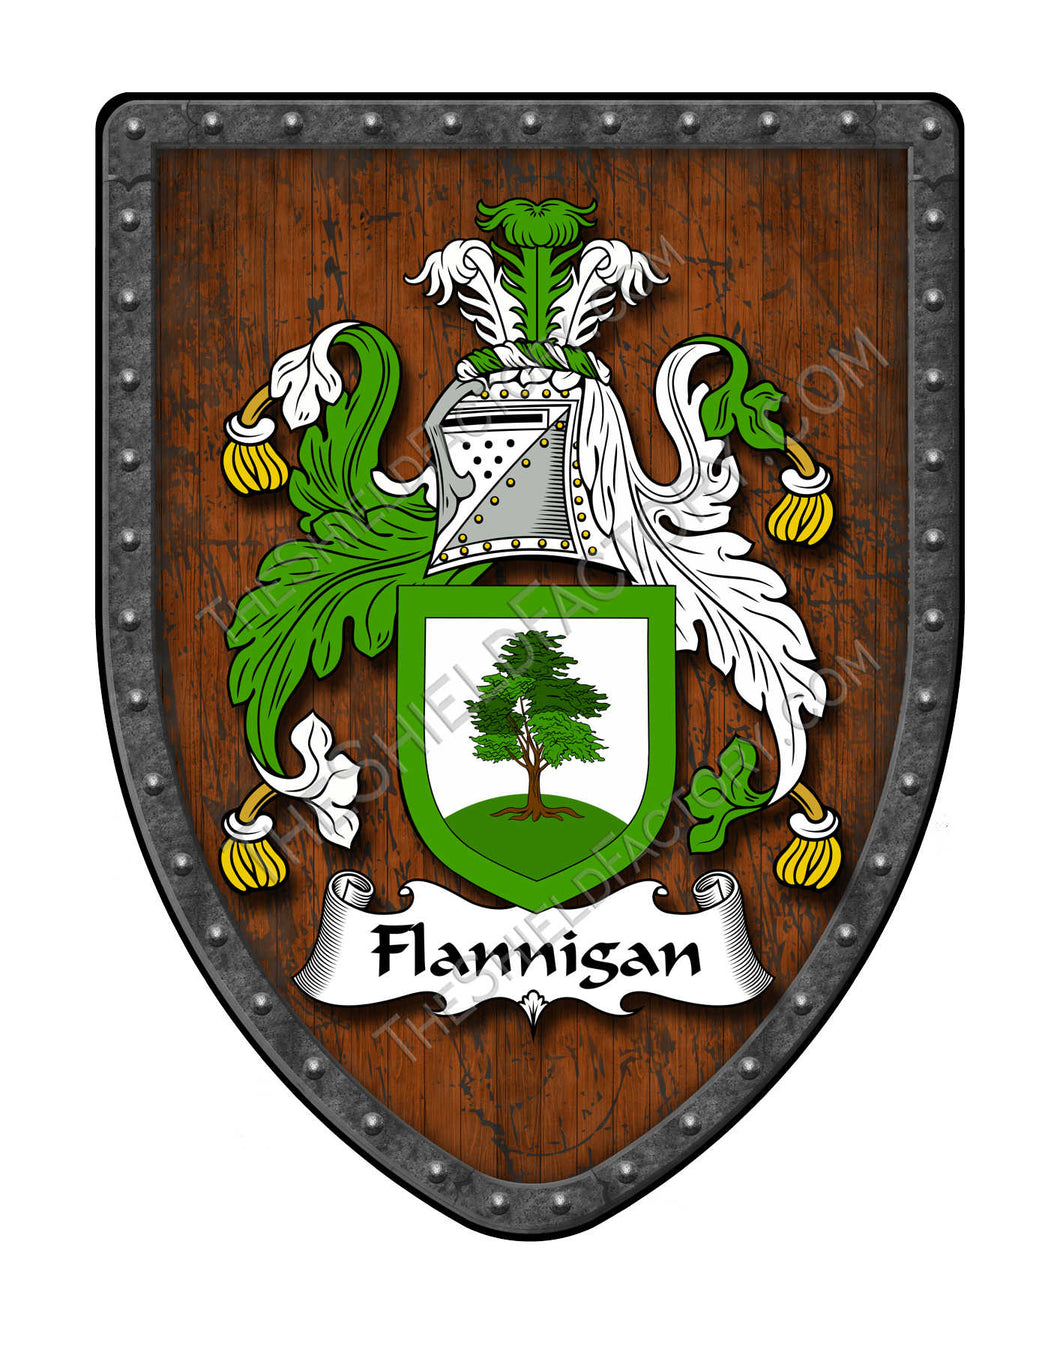 Flannigan